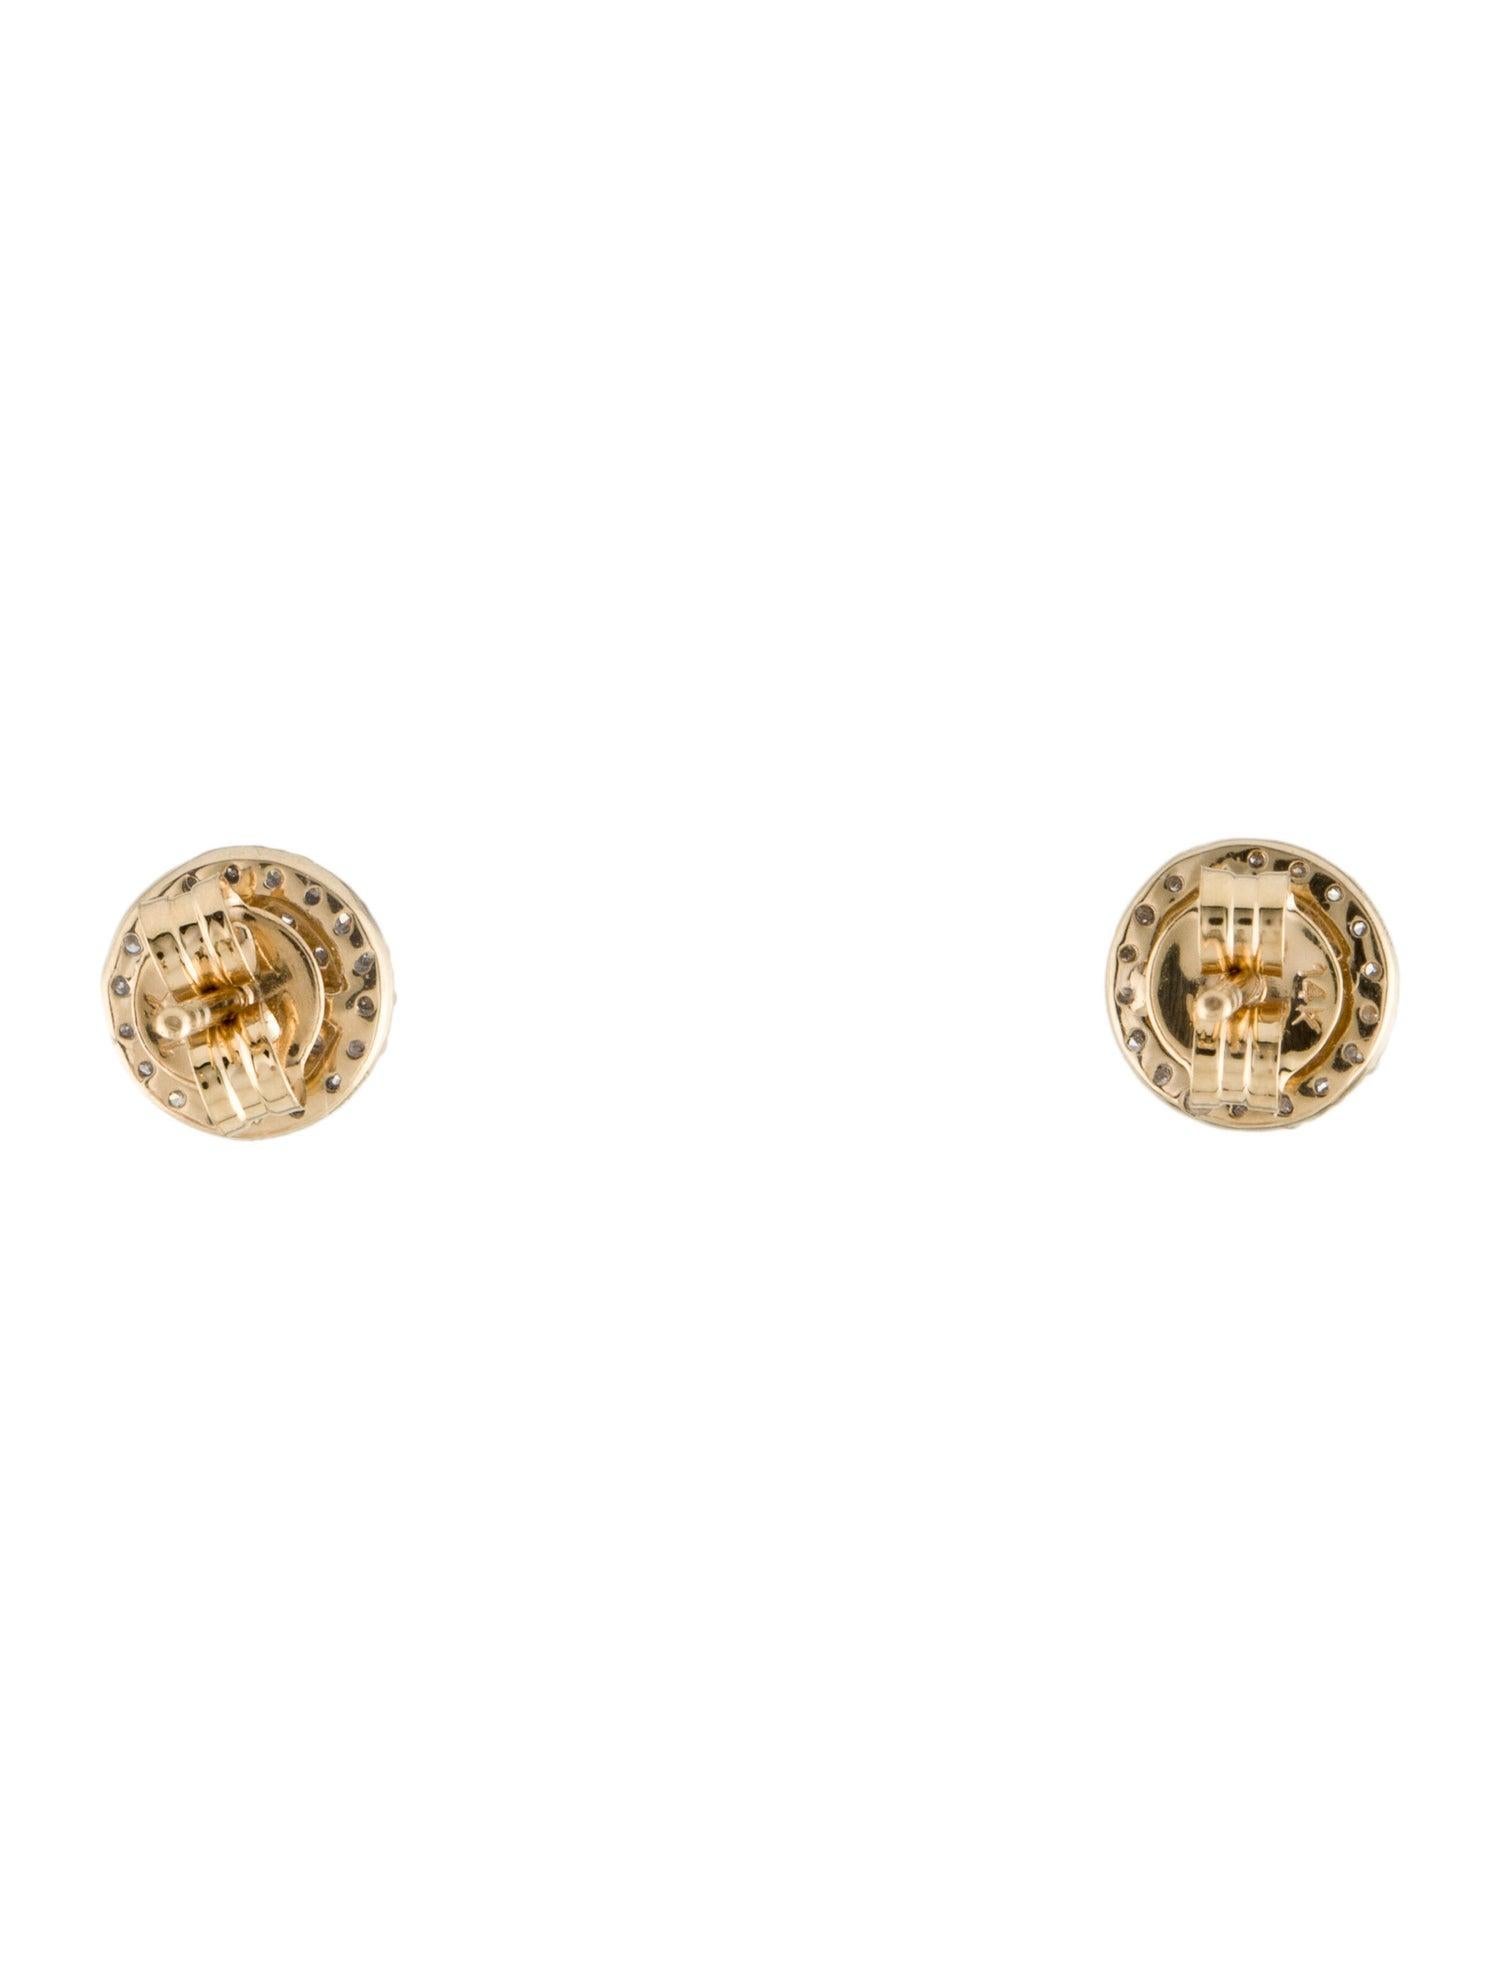 Brilliant Cut 14K Tourmaline & Diamond Stud Earrings - Luxurious & Elegant Gemstone Jewelry For Sale